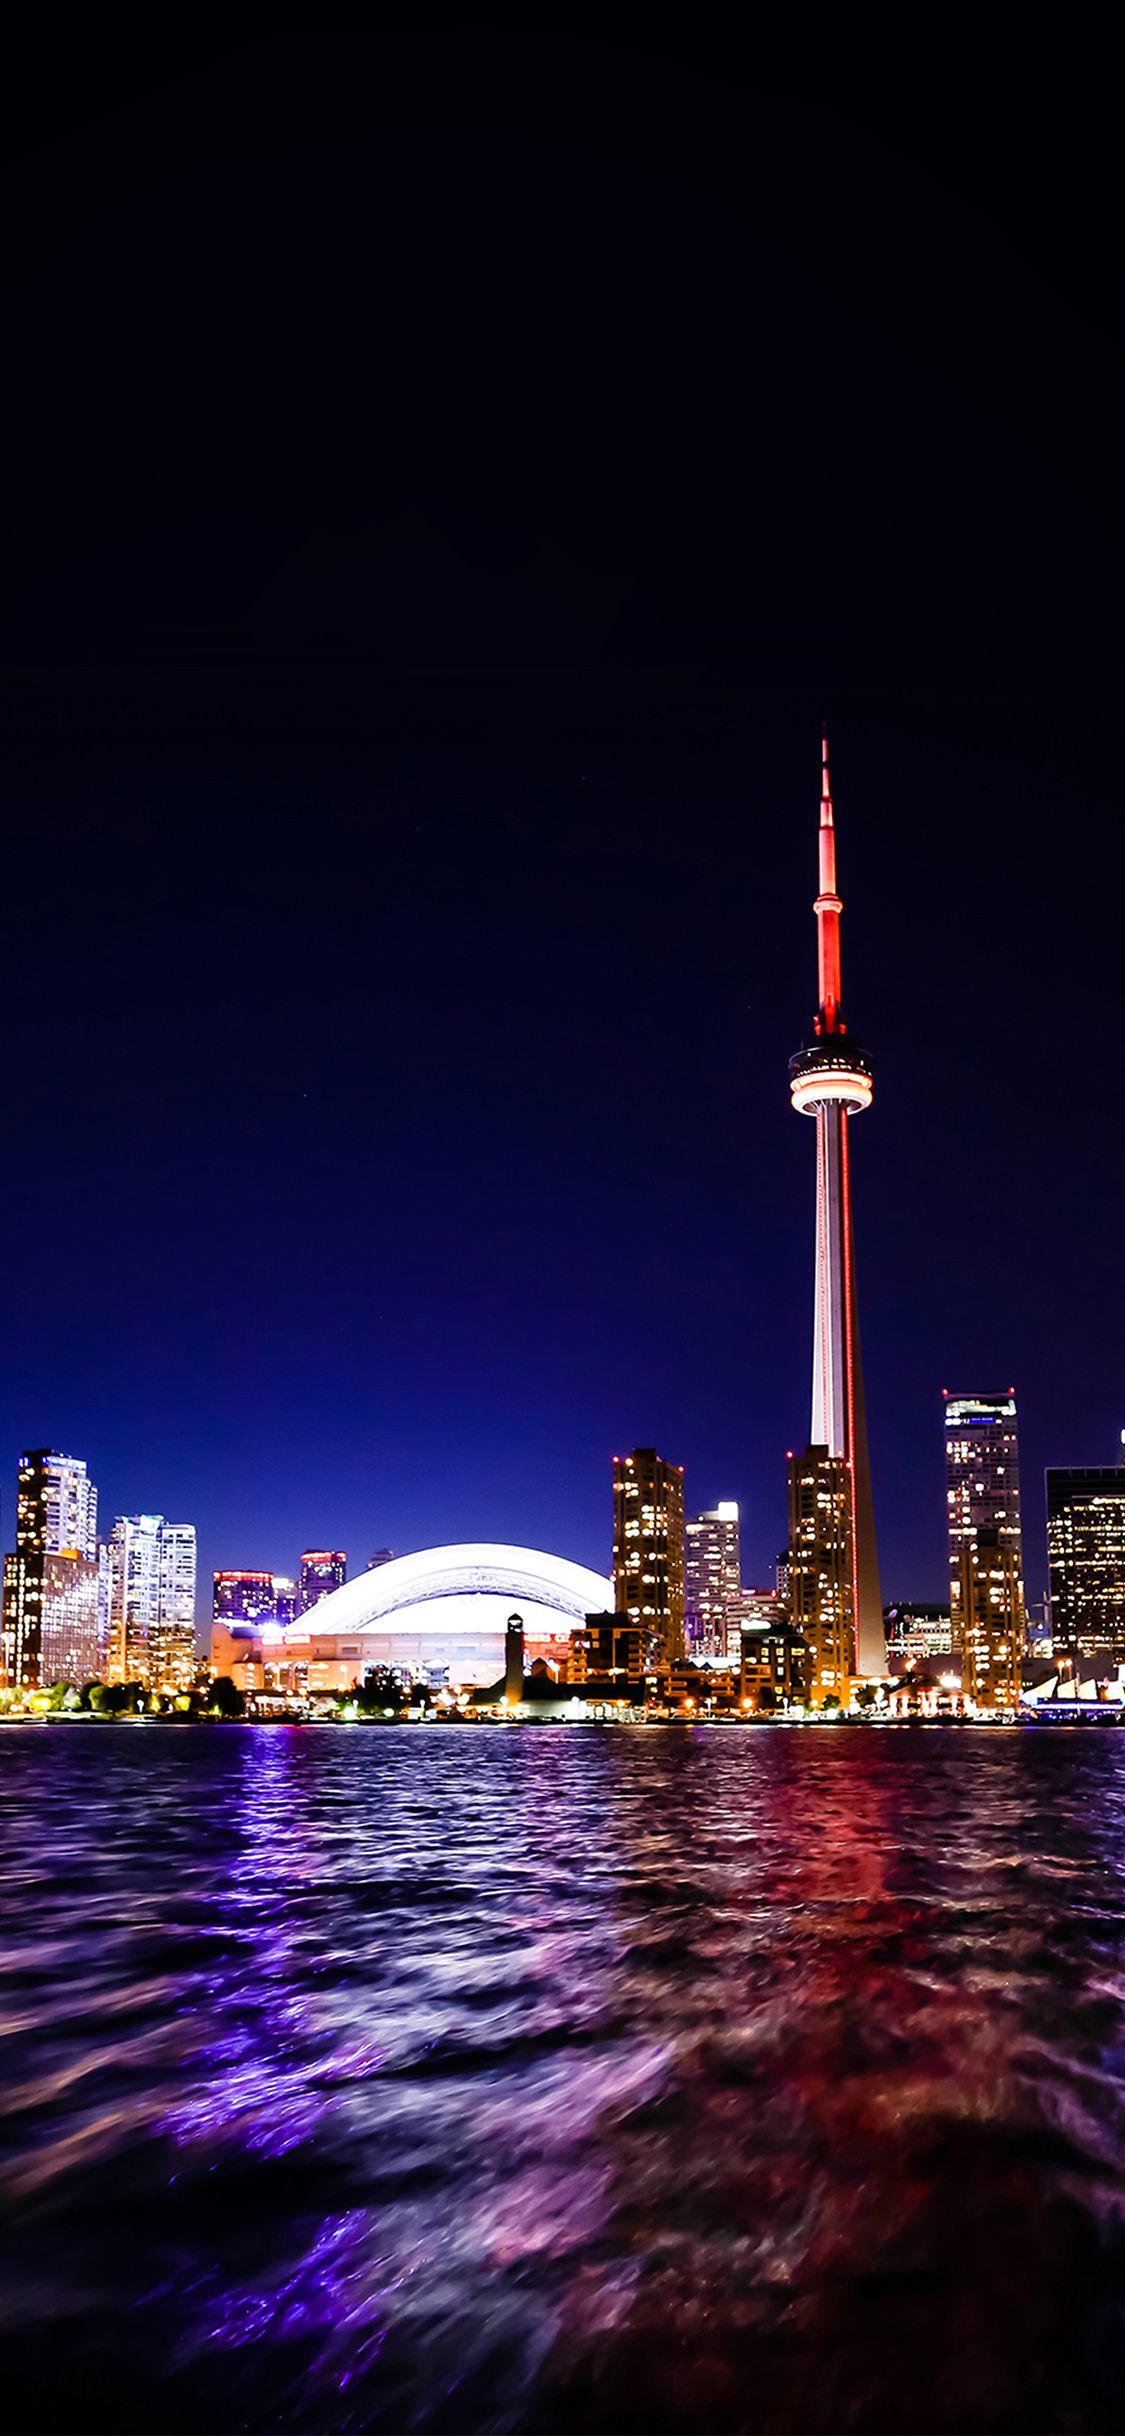 Toronto City night iPhone X wallpaper. Toronto city